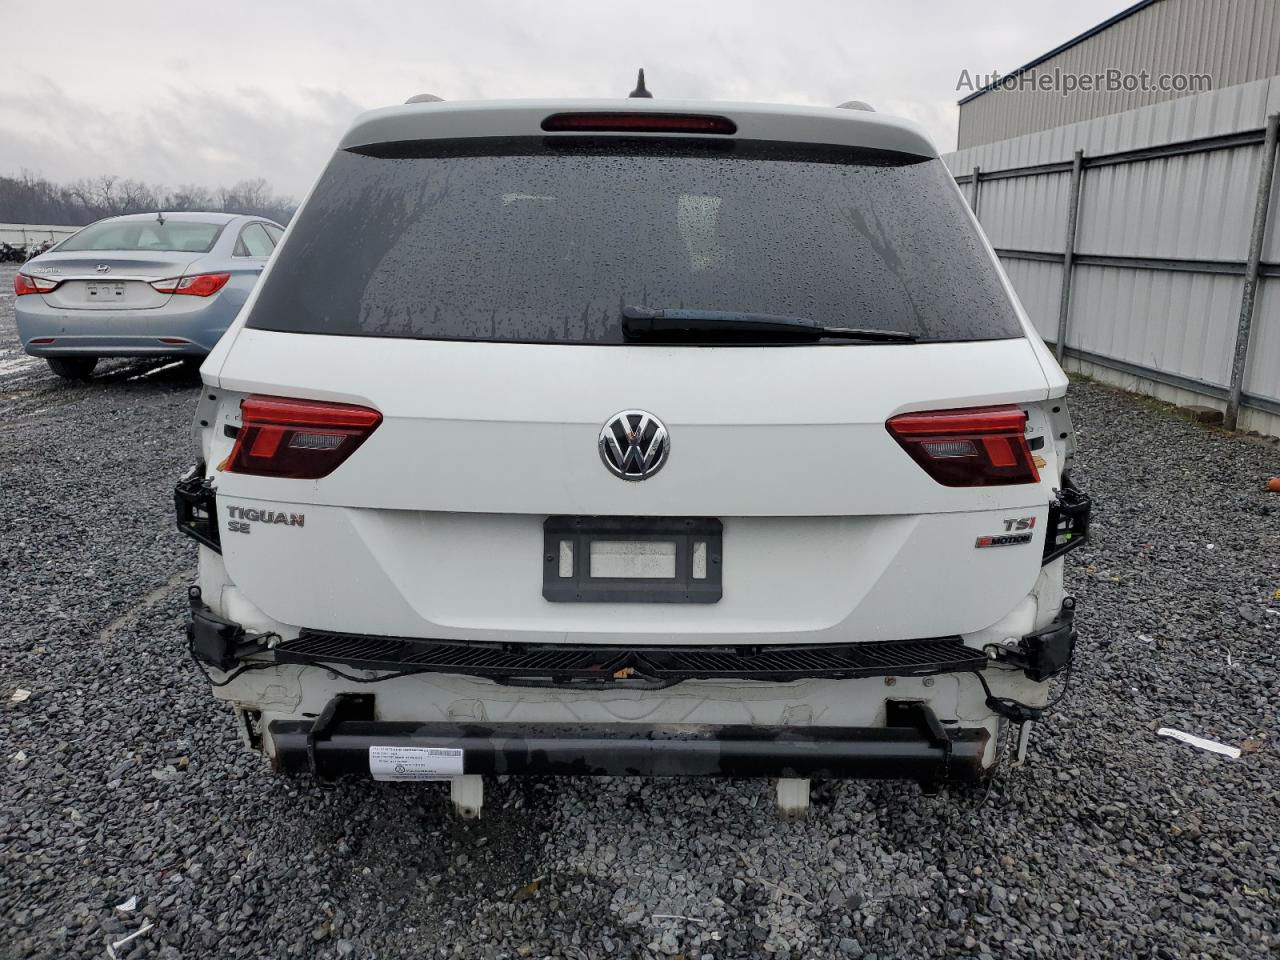 2018 Volkswagen Tiguan Se White vin: 3VV2B7AX4JM219261